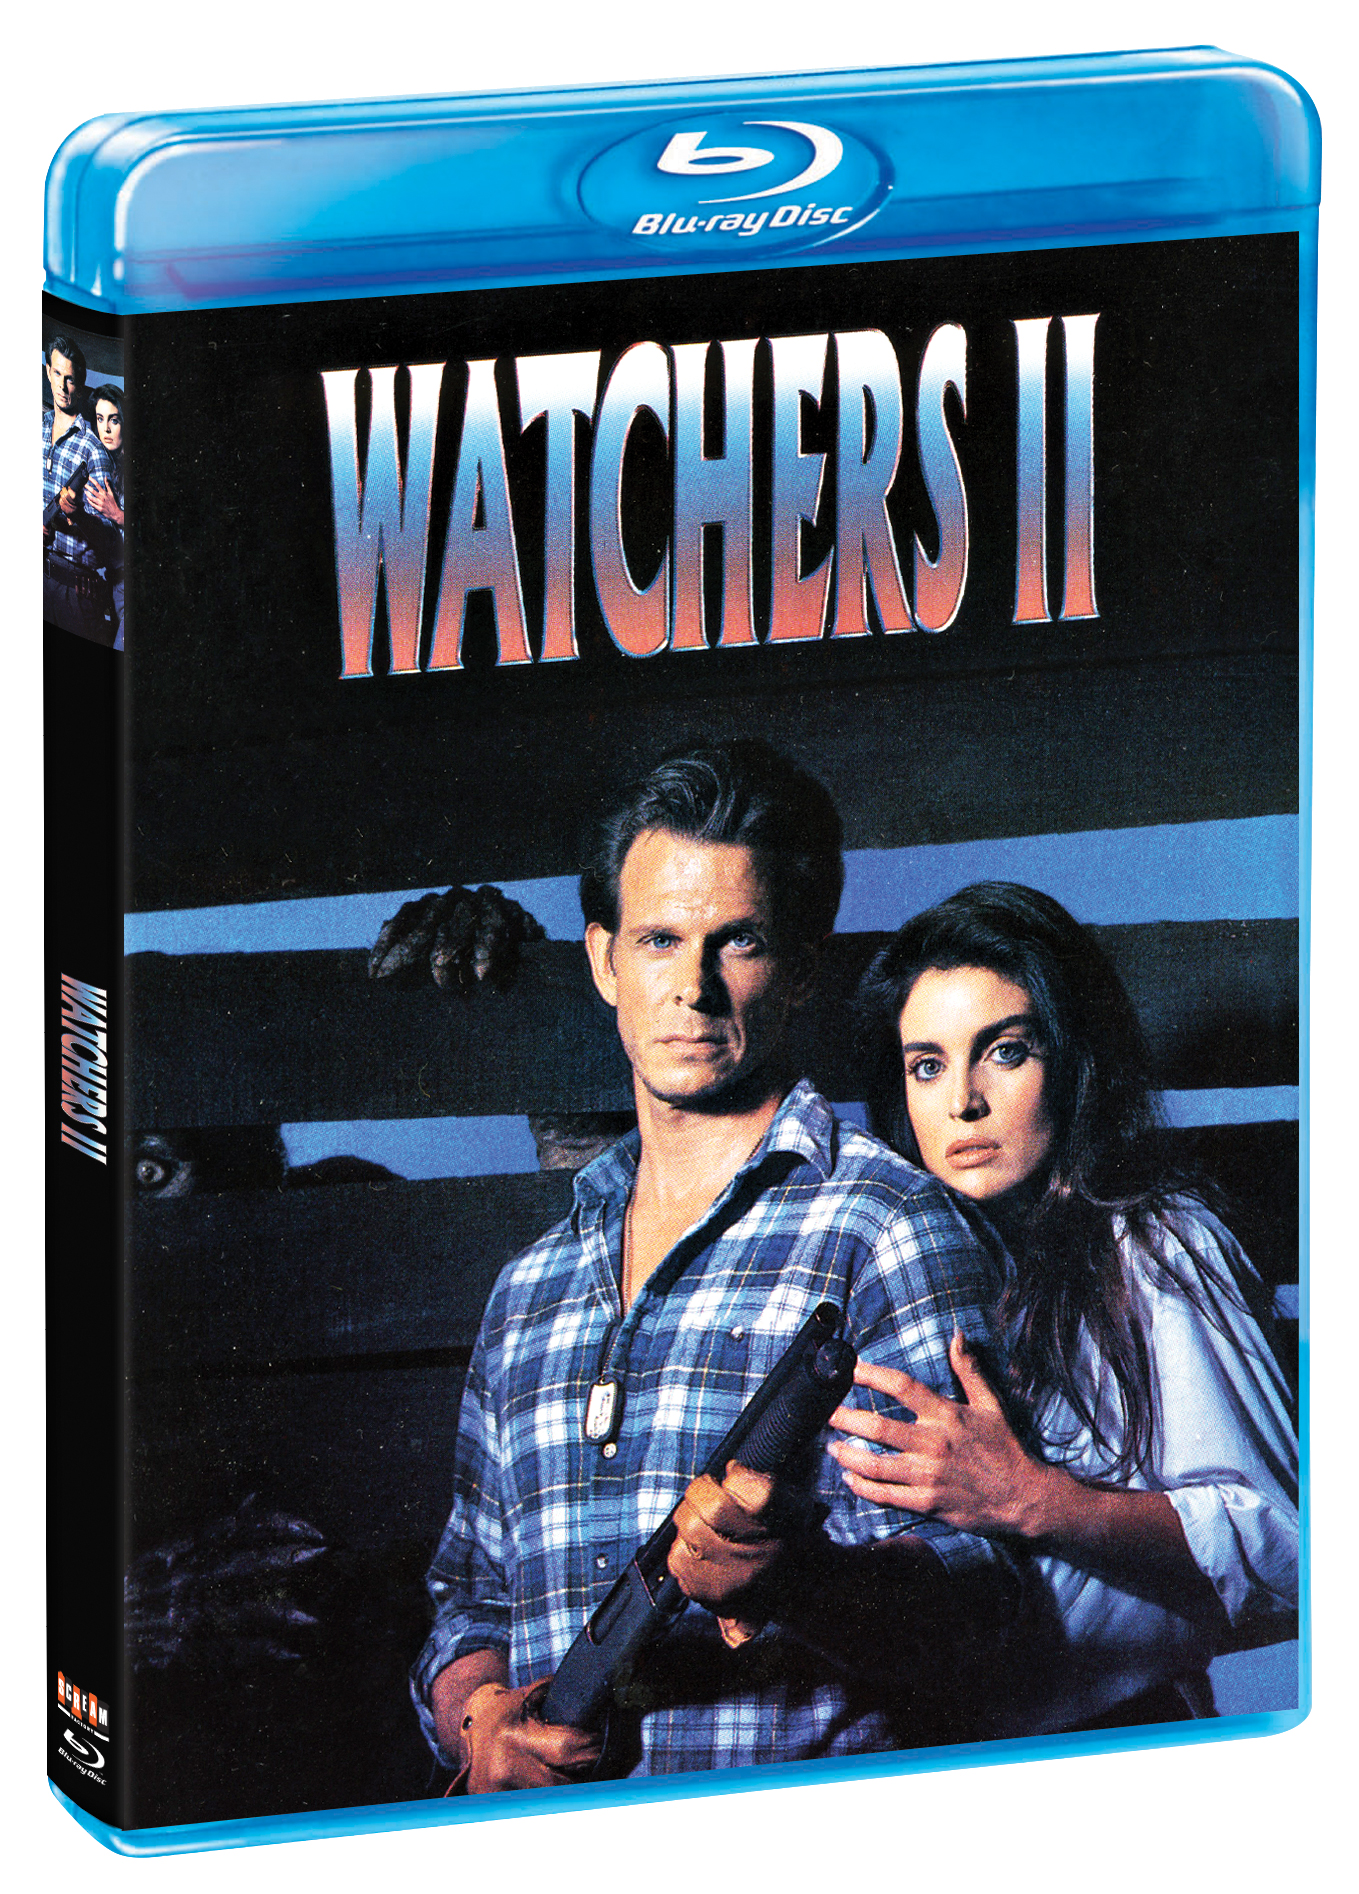 Watchers II (Blu-ray) Scream Factory – Play Music DVDs